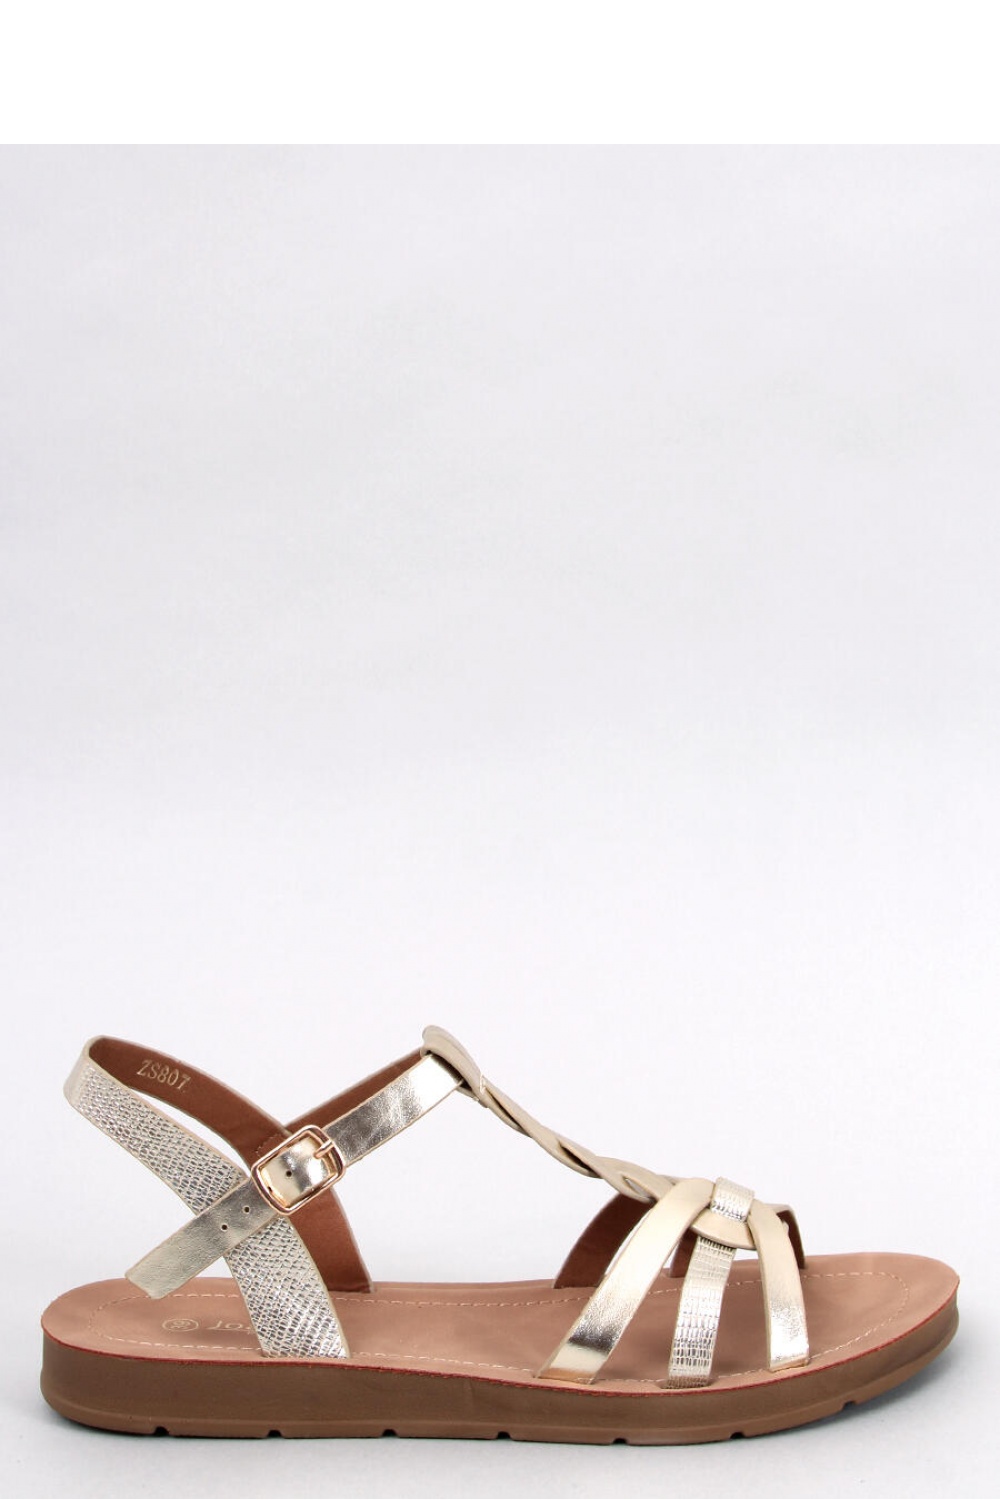 Sandals model 181048 Inello